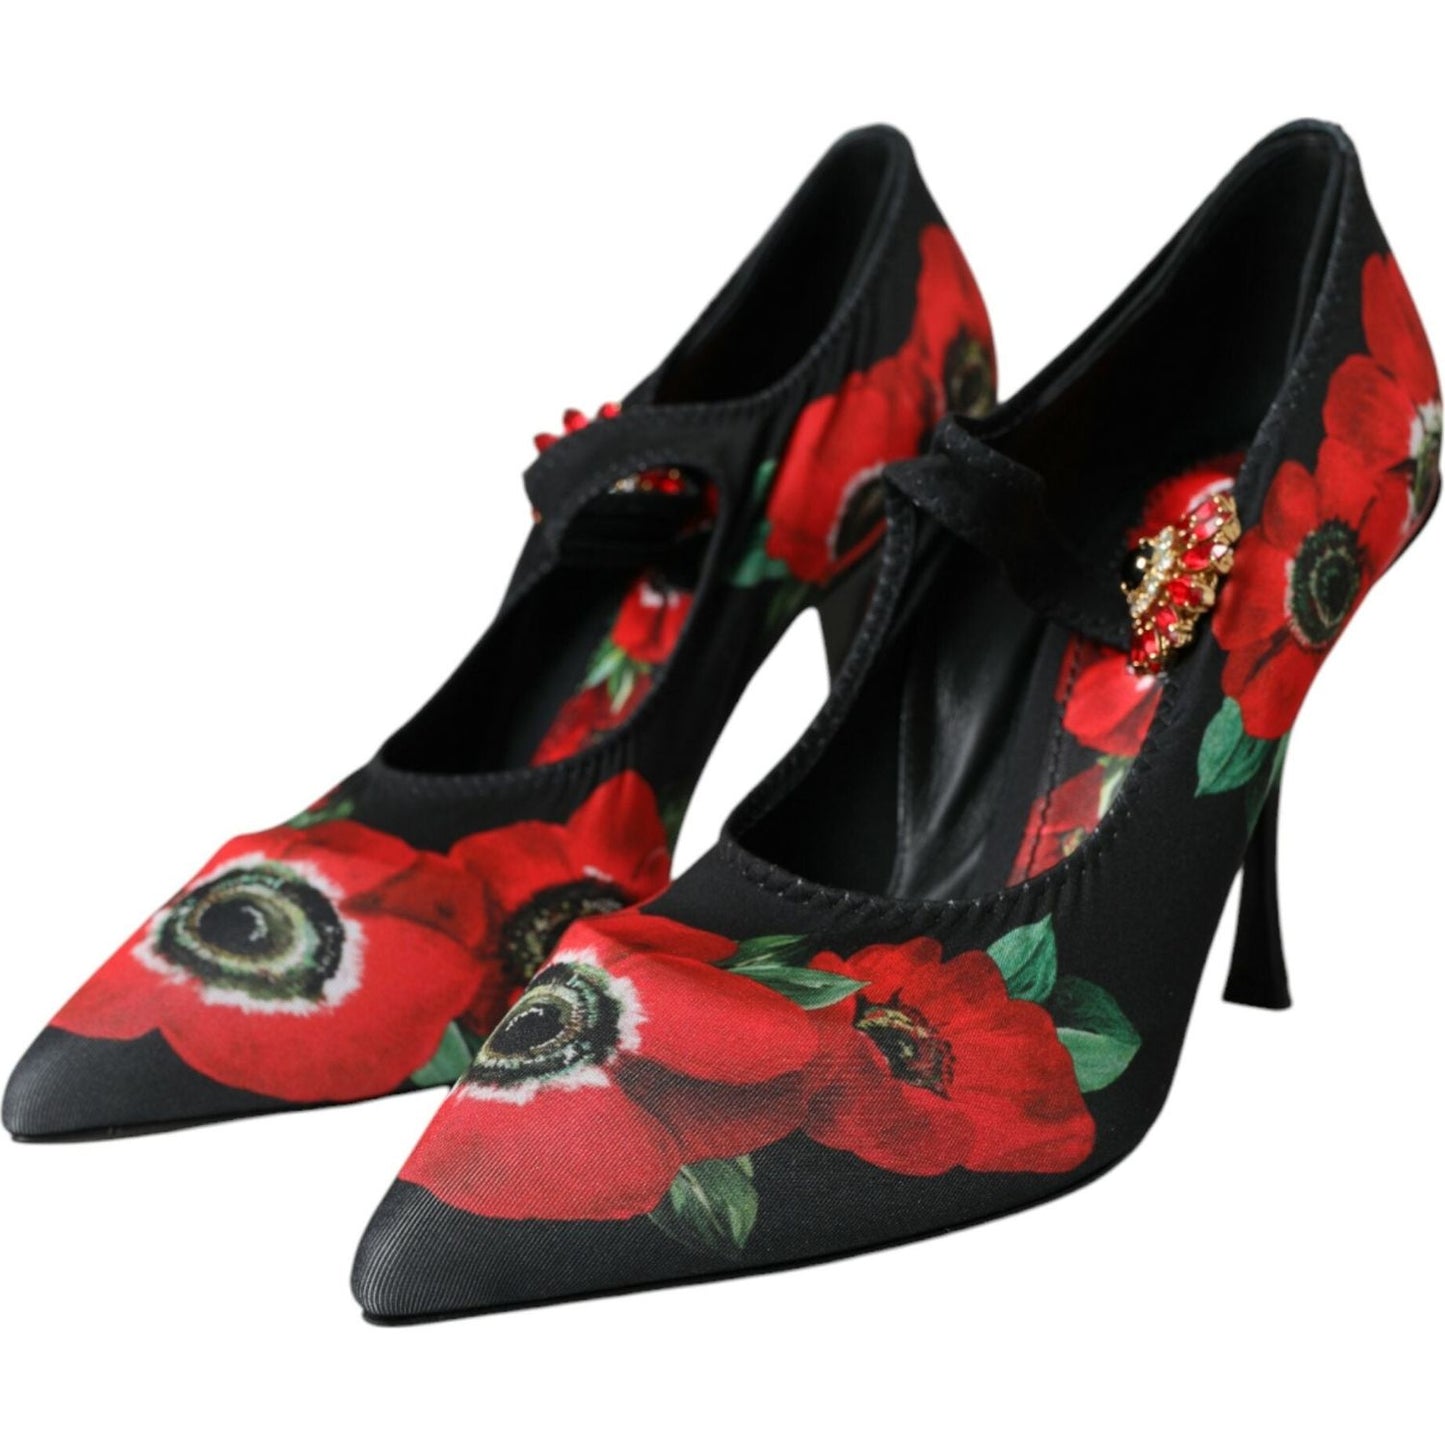 Dolce & Gabbana Black Floral Crystal Mary Jane Pumps Shoes black-floral-crystal-mary-jane-pumps-shoes